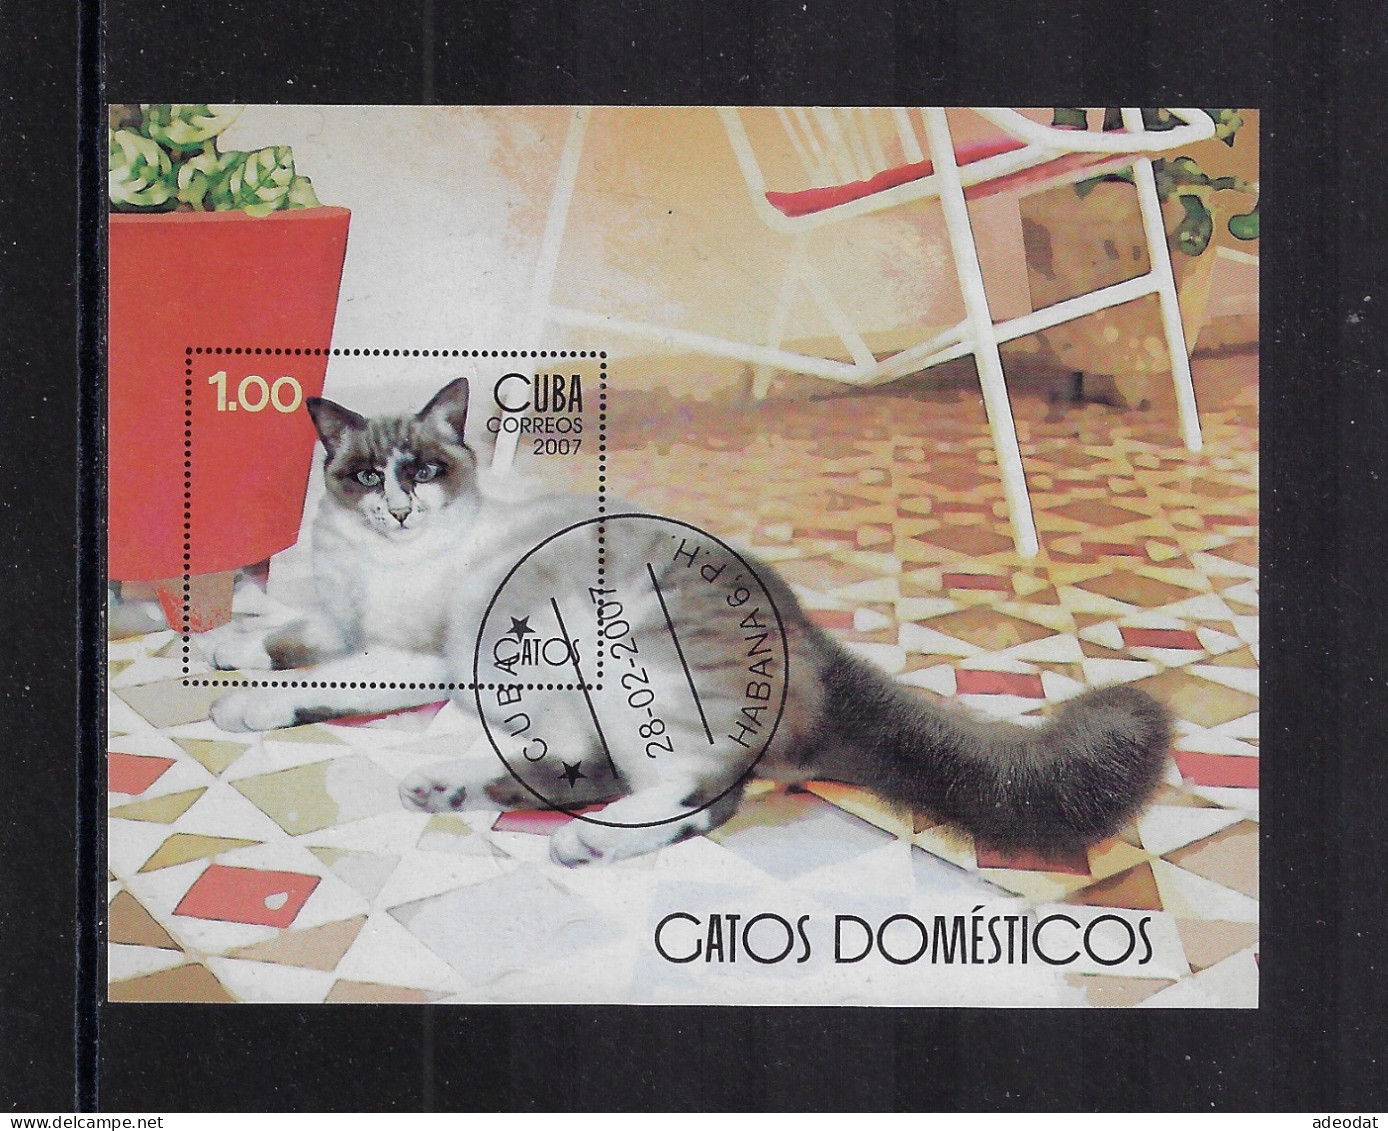 CUBA 2007 CATS SCOTT 4679 CANCELLED - Usados